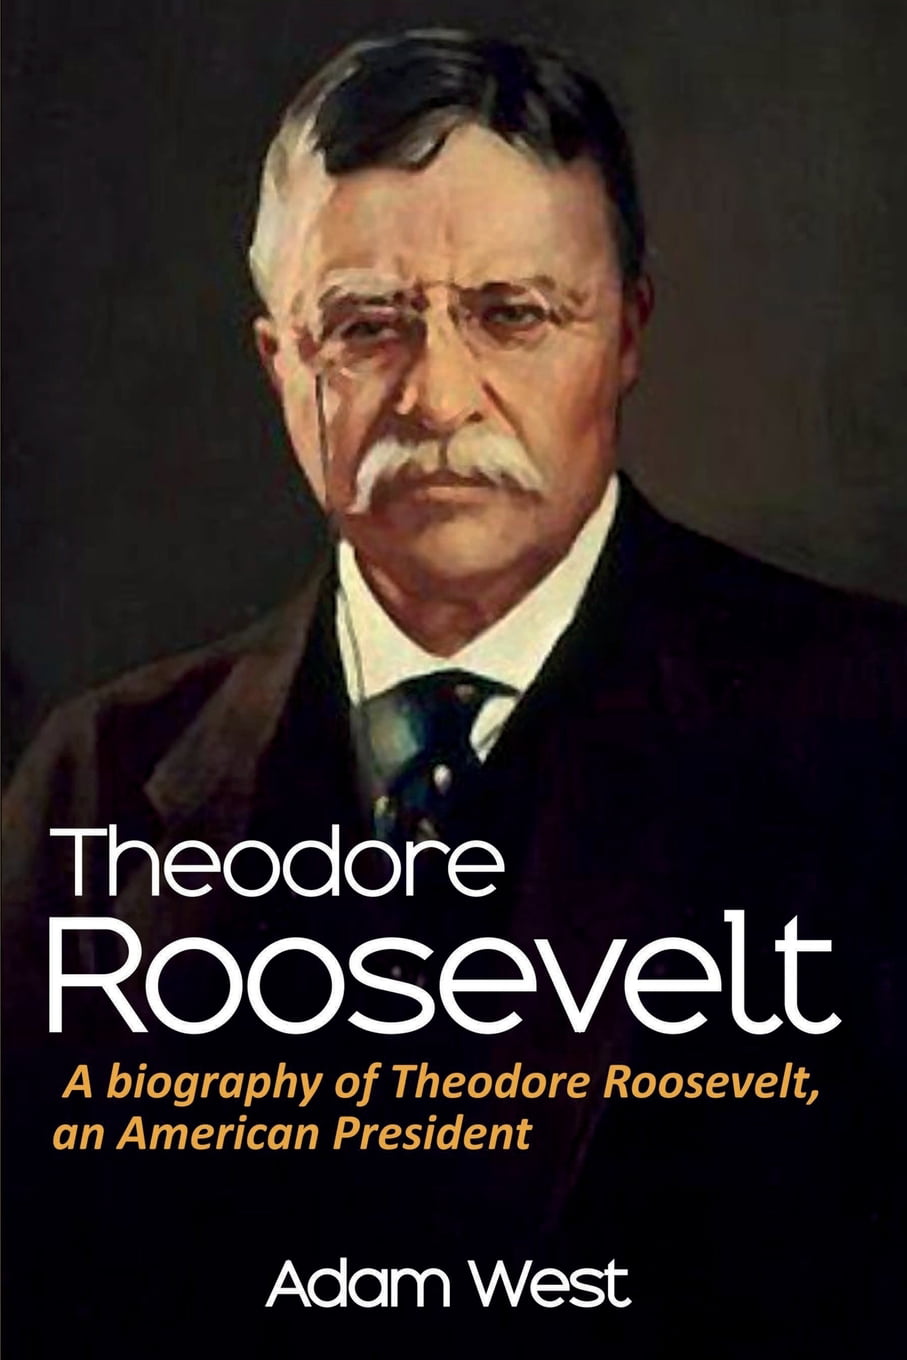 theodore roosevelt biography essay